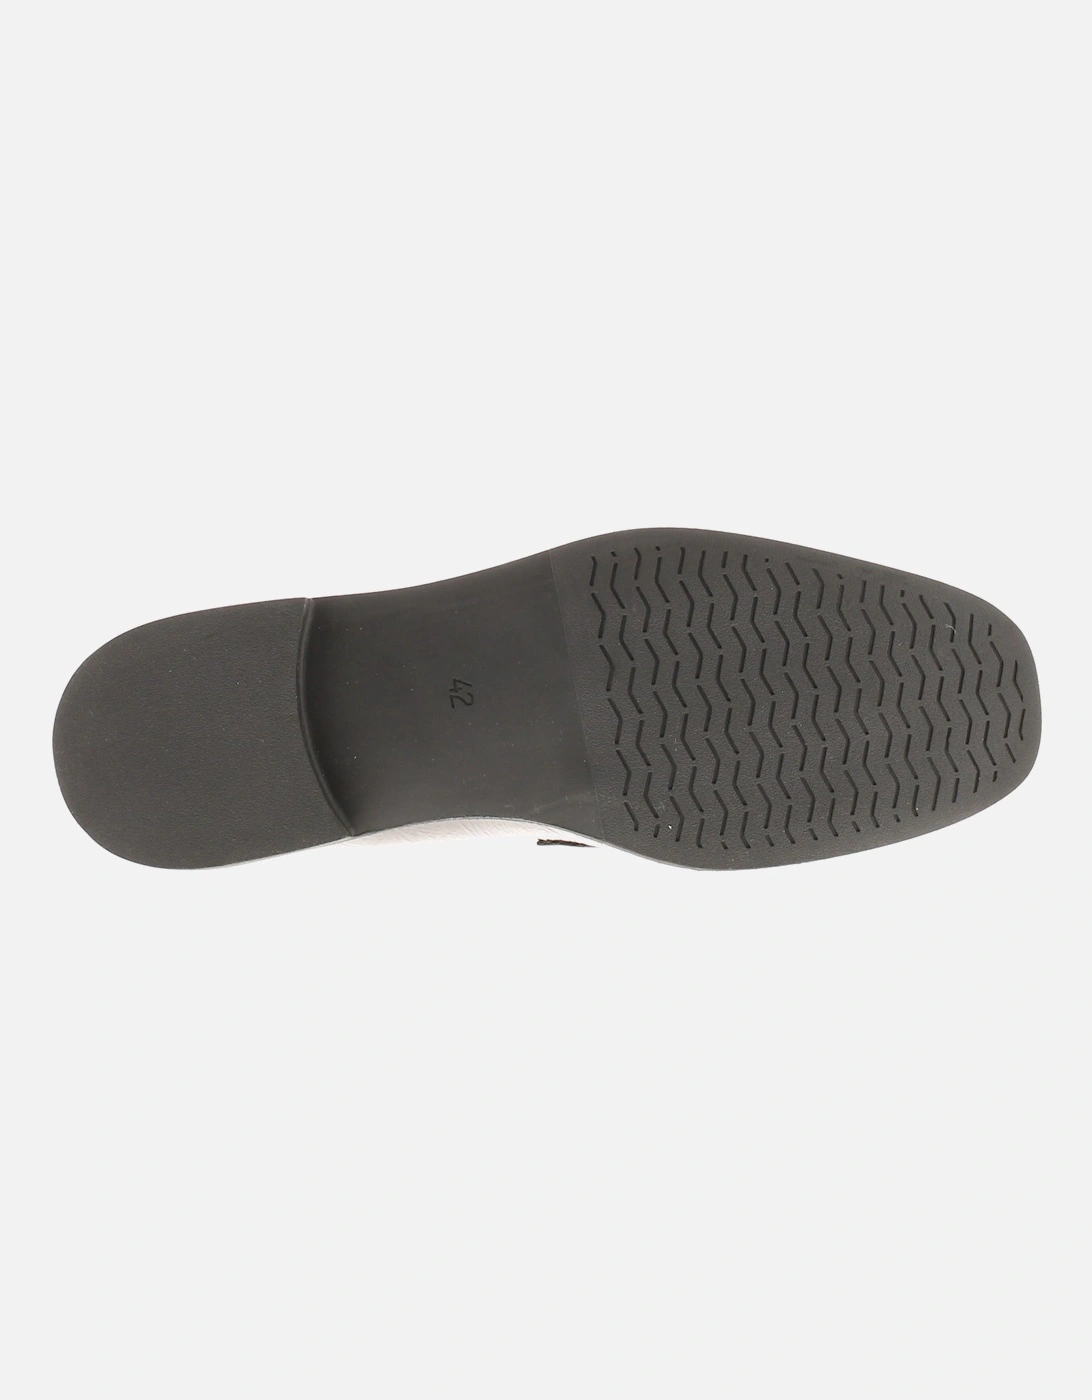 Womens Shoes Flat Mia Slip On mocca patent UK Size